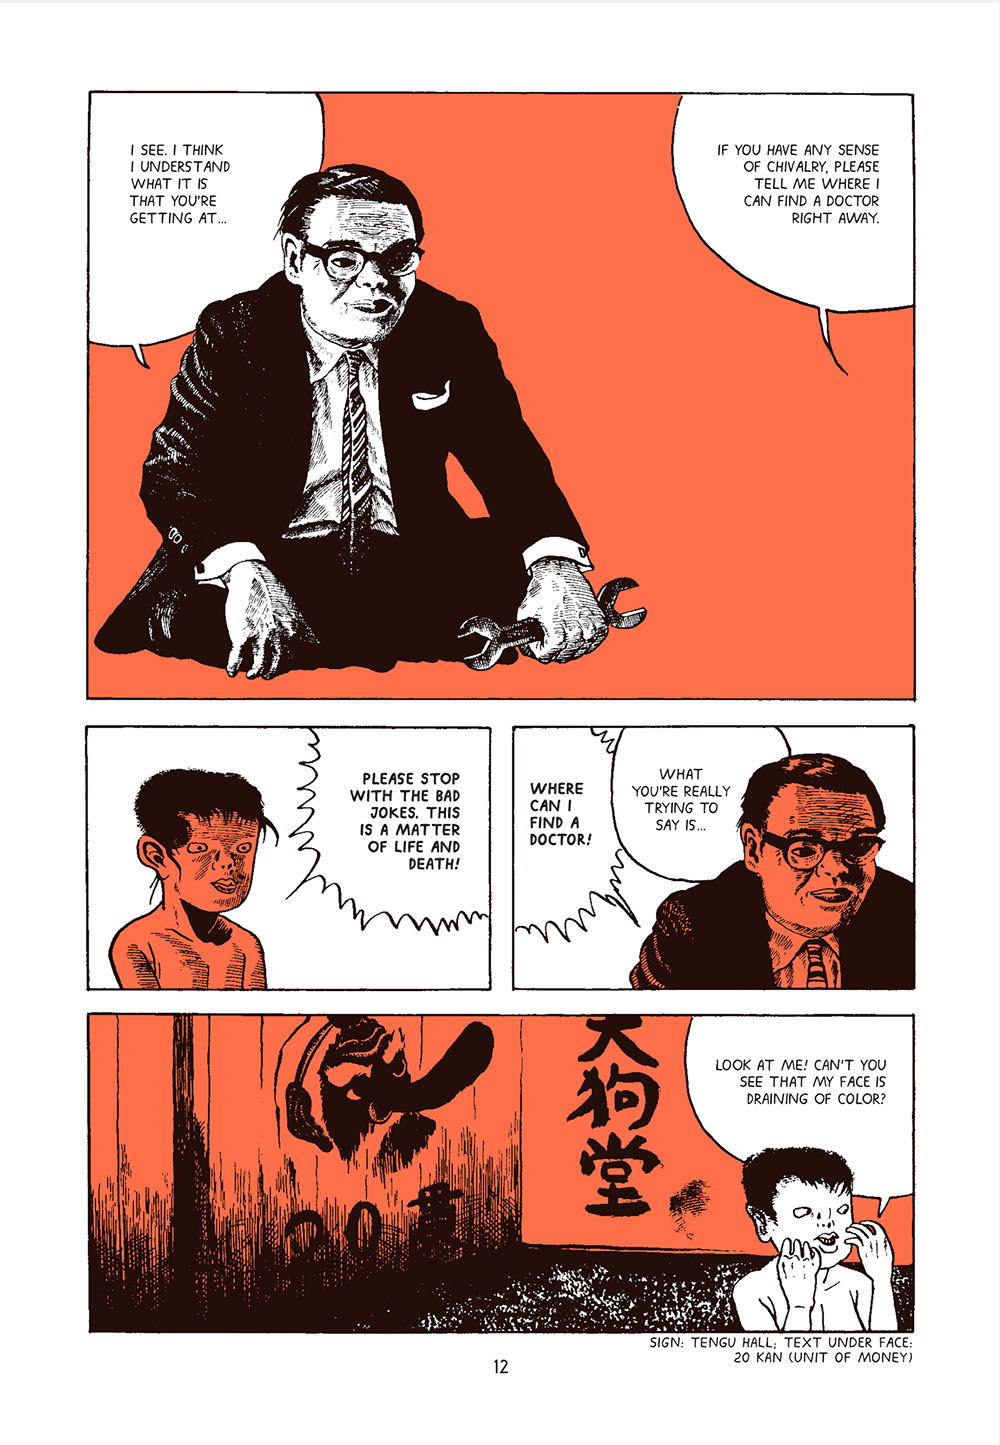 Ajin: Demi-Human Volume 1 - 16 complete manga comics Set Language